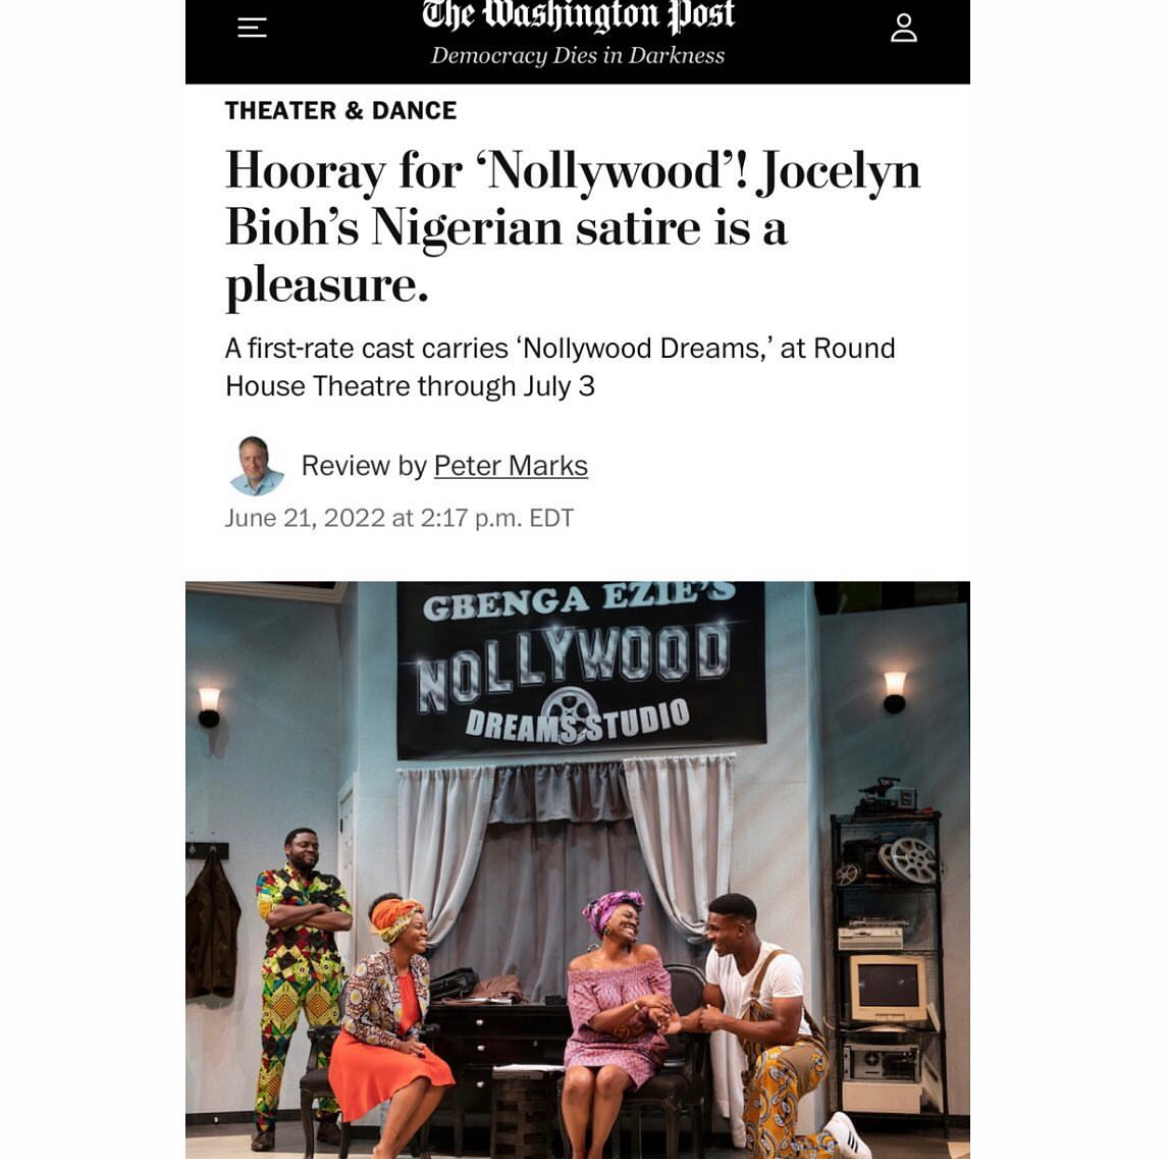 Washington Post Review by Peter Marks: 'Hooray for Nollywood'! Jocelyn Bioh's Nigerian satire is a pleasure